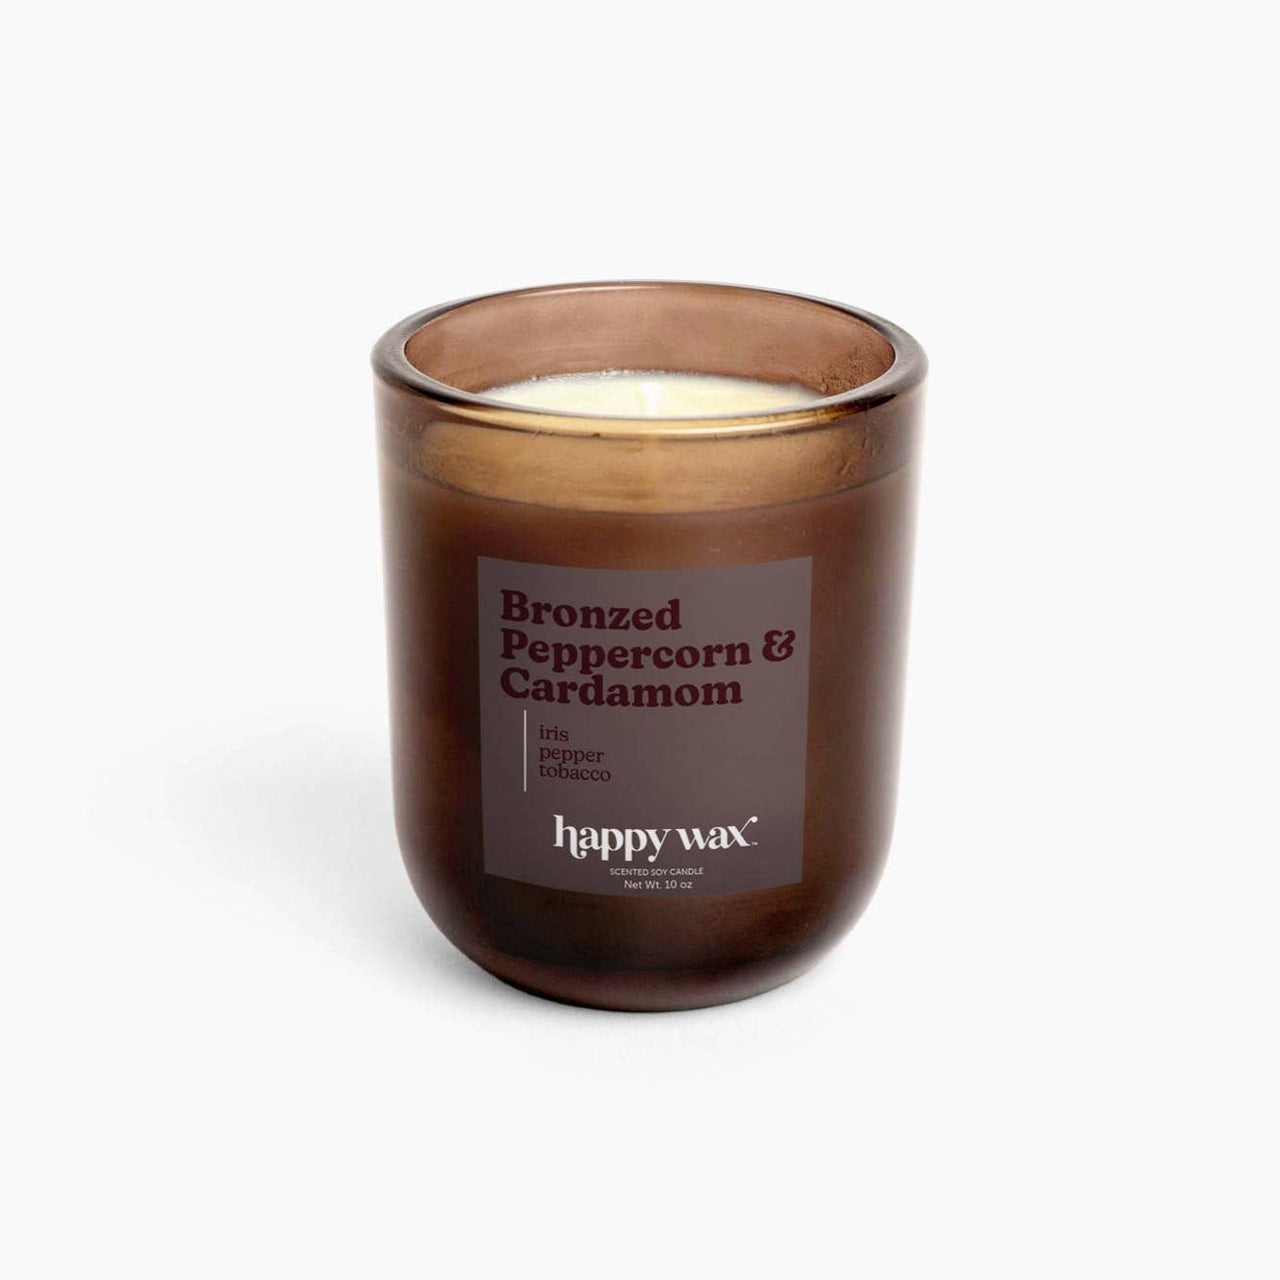 Bronzed Peppercorn & Cardamom Single Wick Candle  Happy Wax   